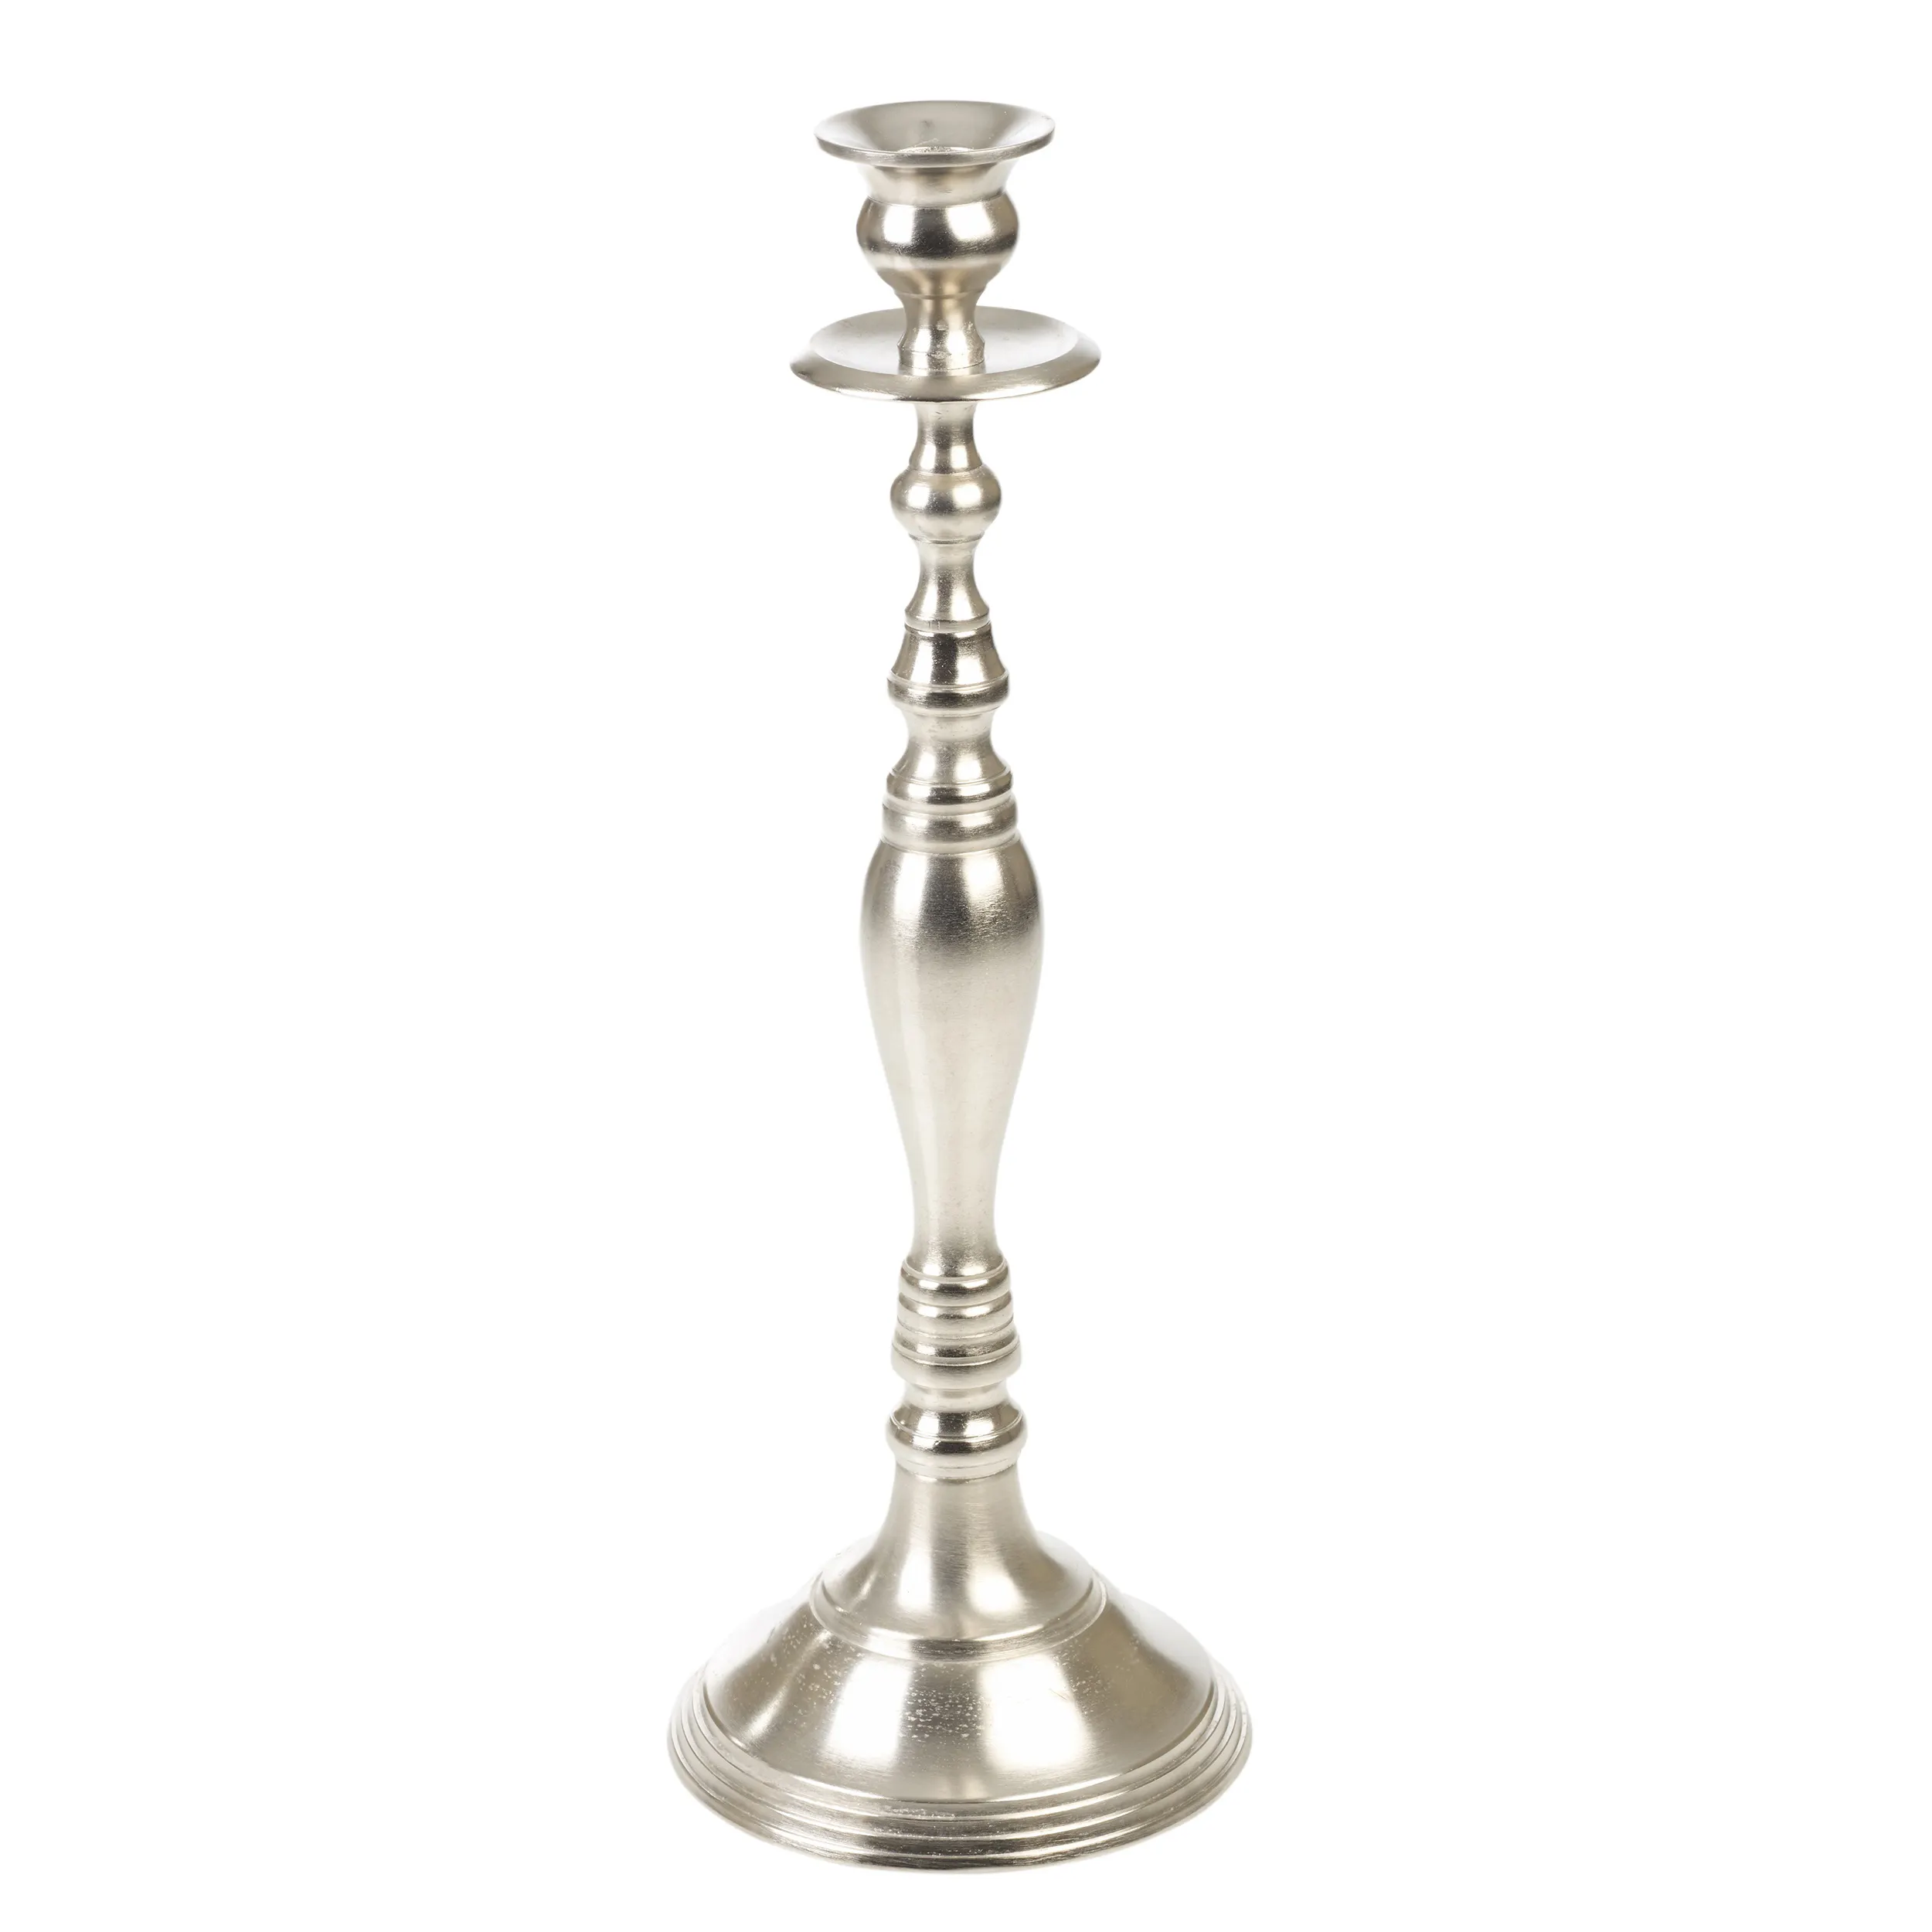 Nova chegada Vintage Candle Holder Único Candle Stand Metal alumínio claro polido Tall Candle Stick 4 Wedding Decore & Home